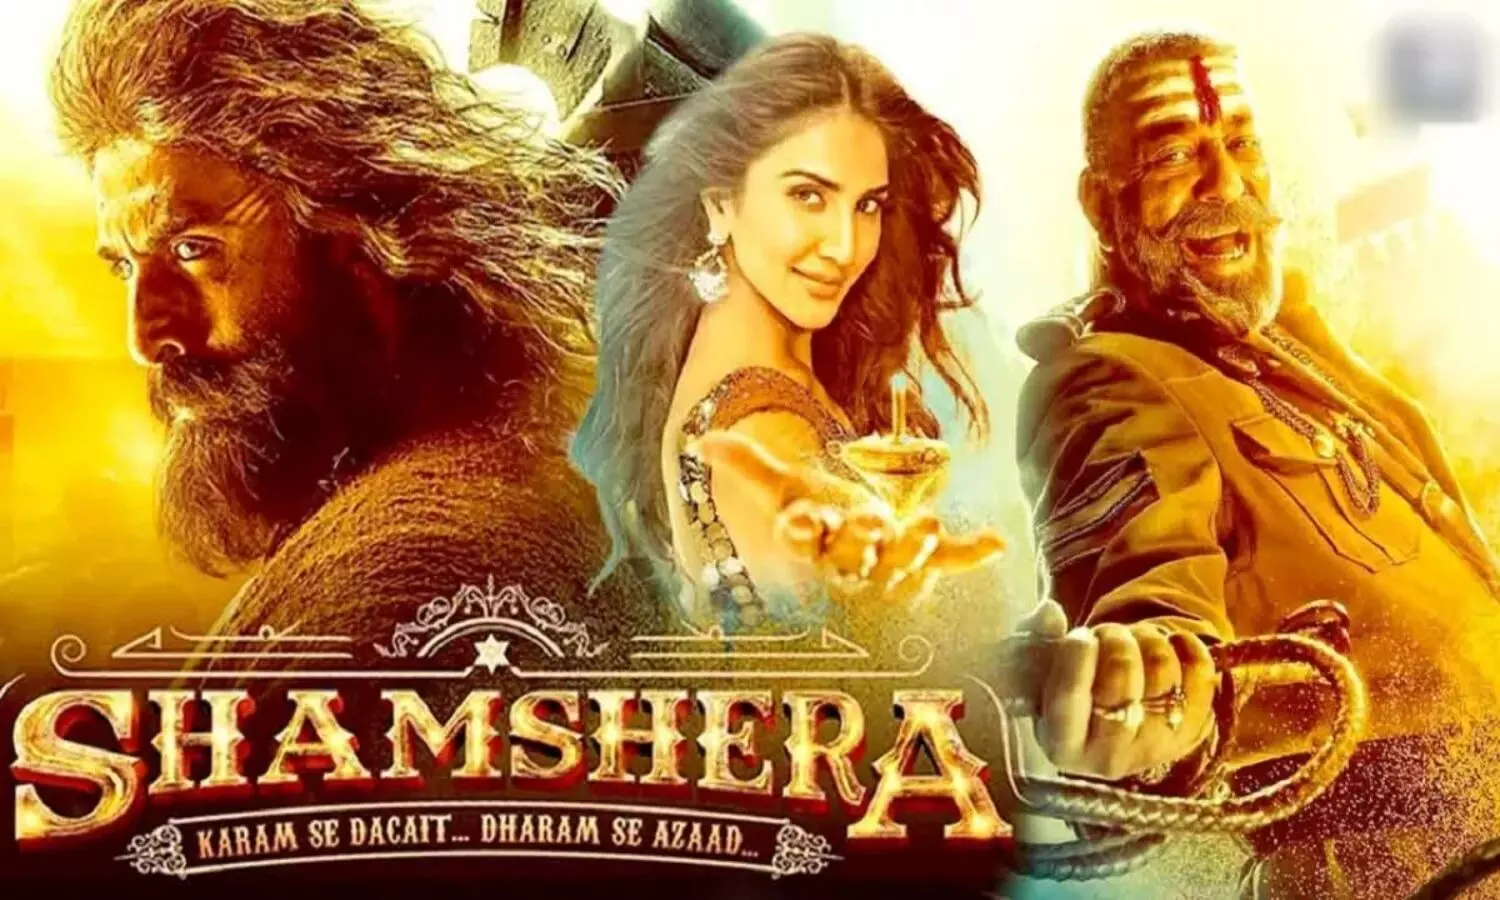 Movie Shamshera Review